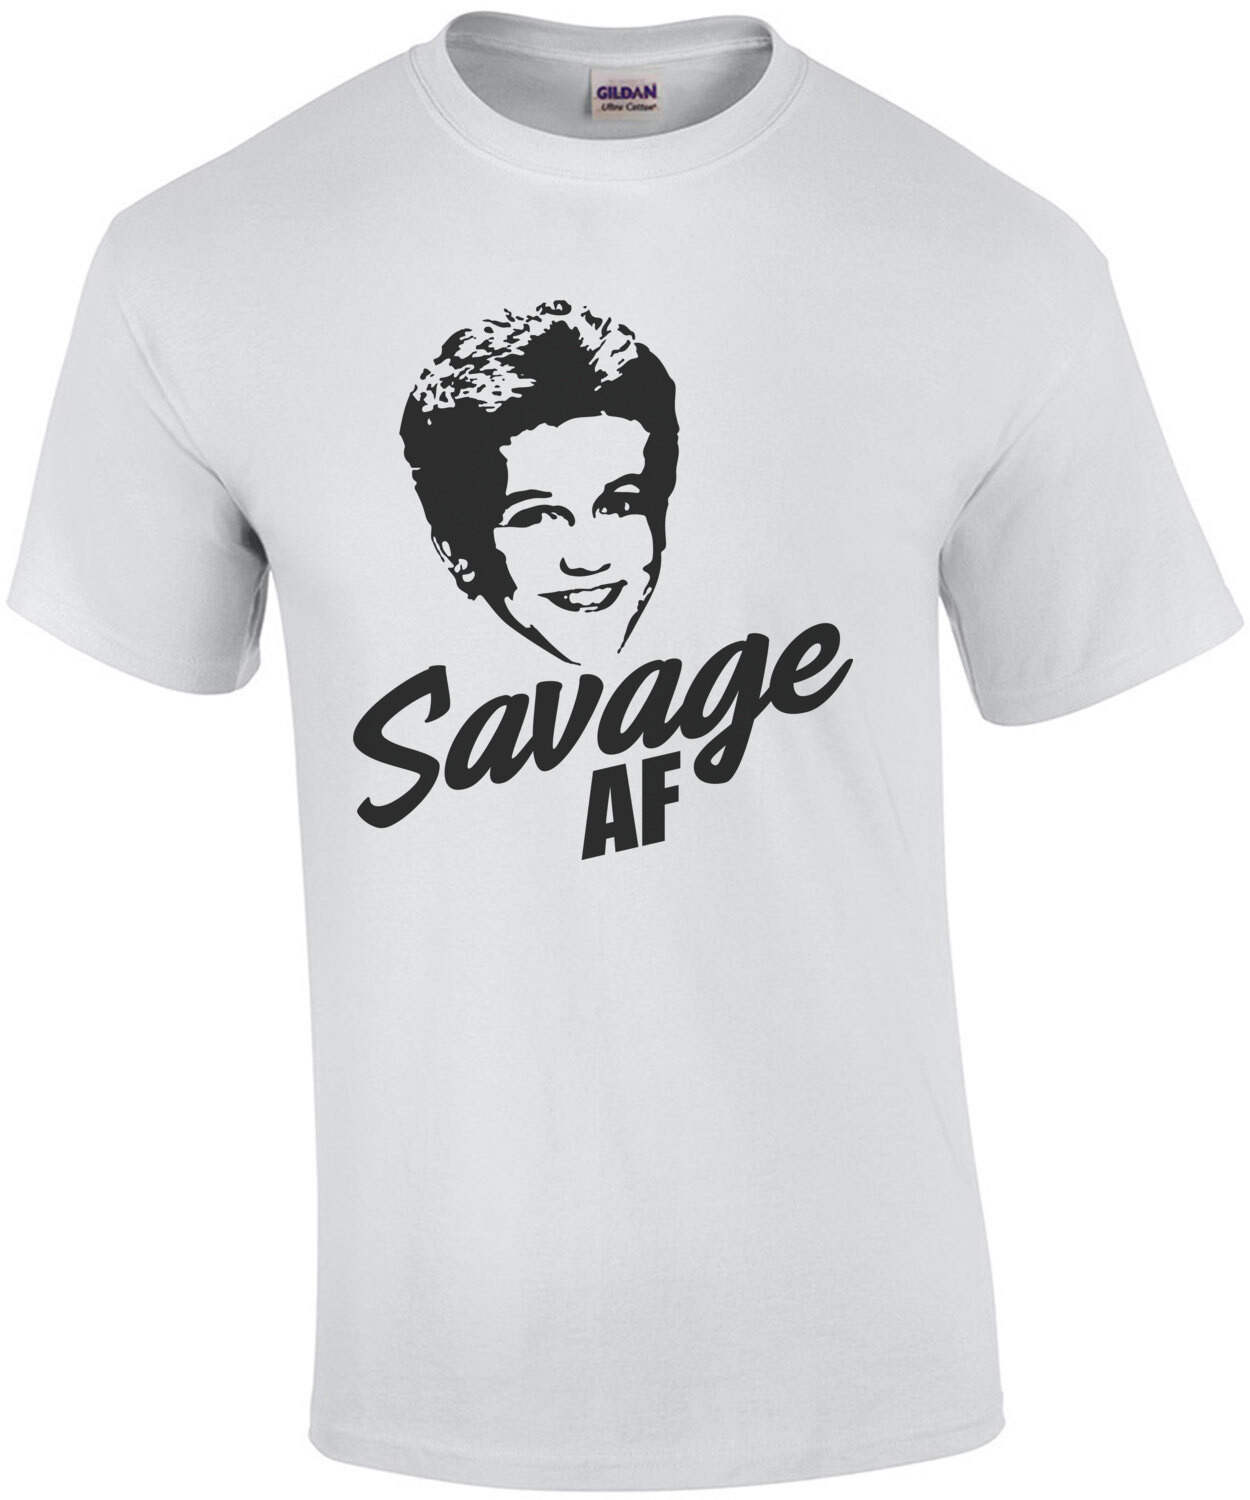 Savage AF - The Wonder Years - Kevin Arnold - Fred Savage - 80's T-Shirt